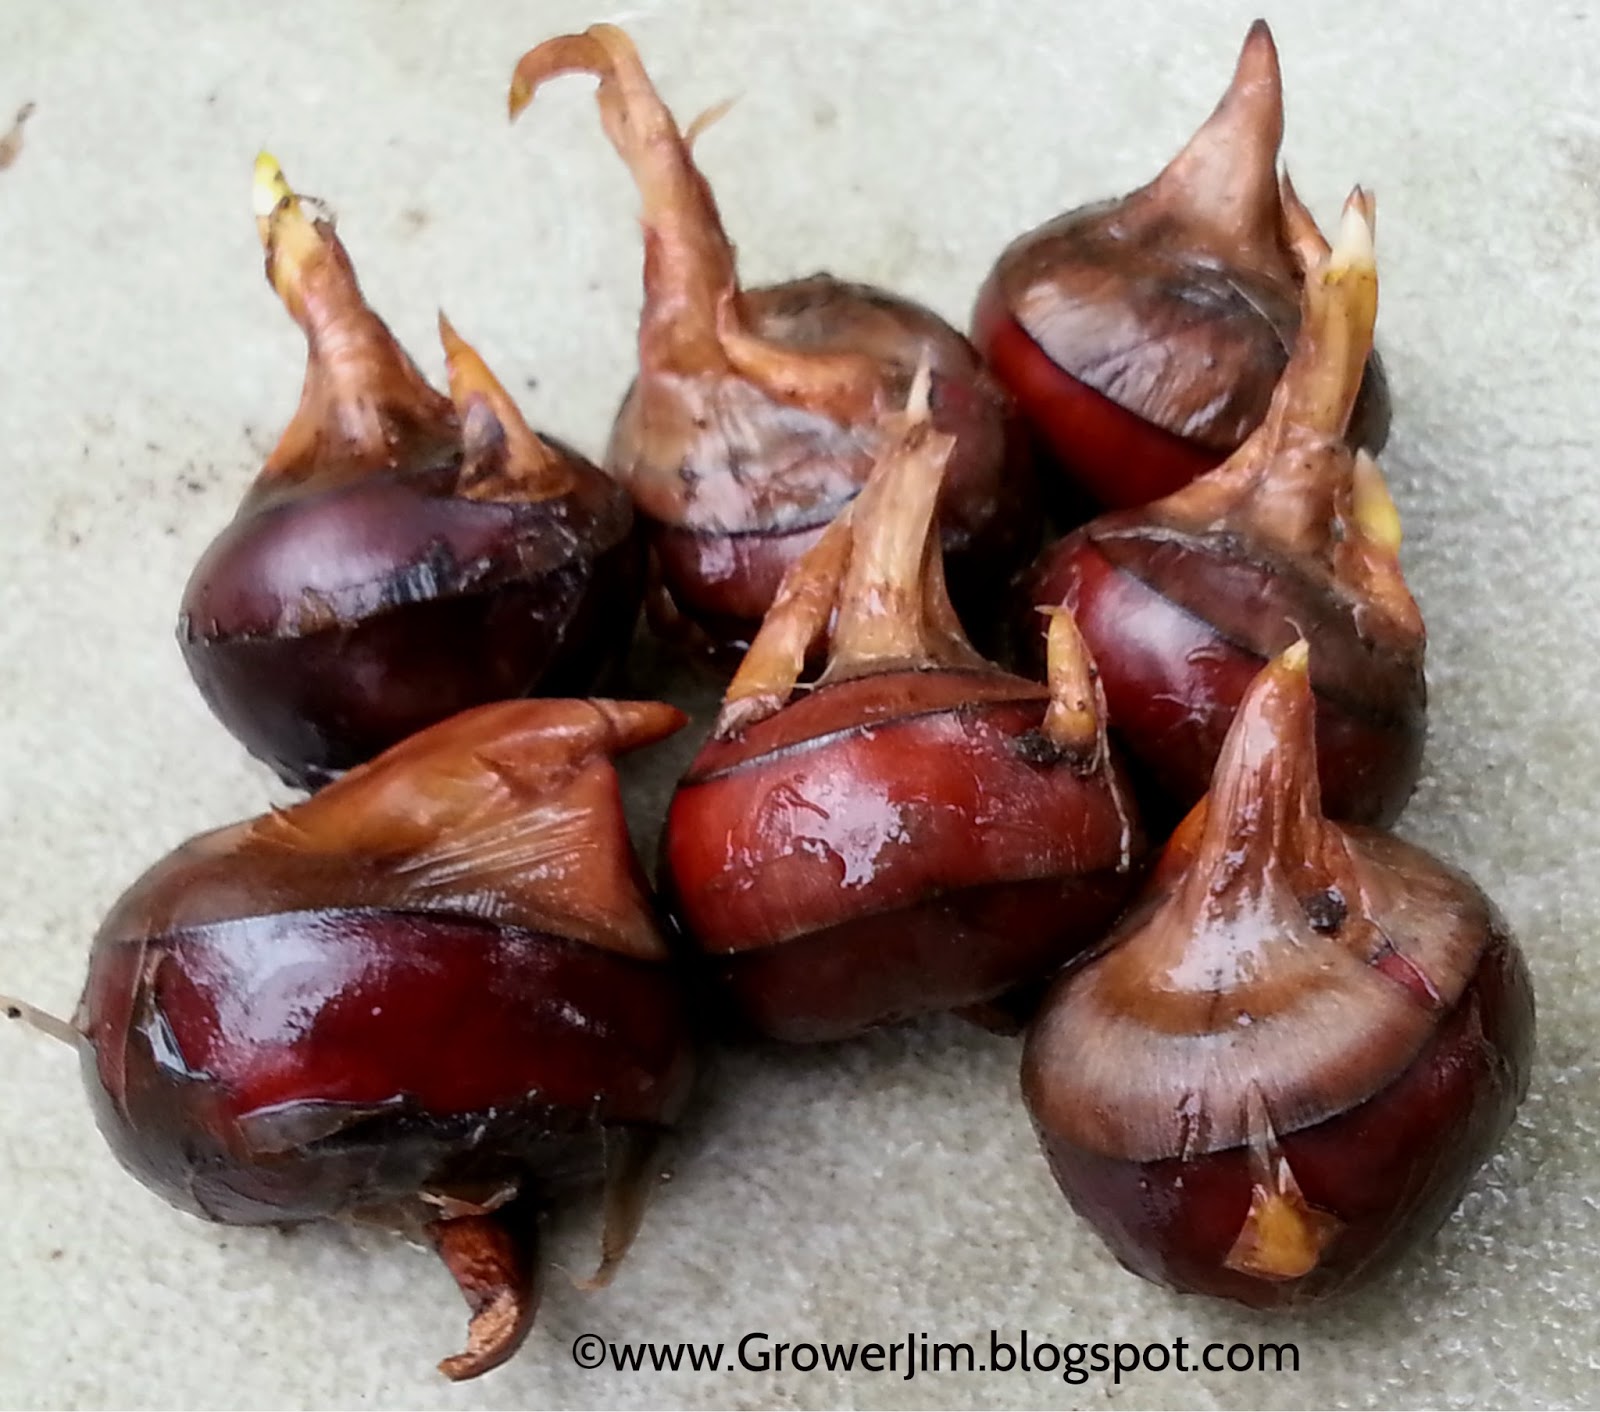 100 Chinese Water Chestnut Plant Seeds Rare Sweet Eleocharis Dulcis Bonsai Home